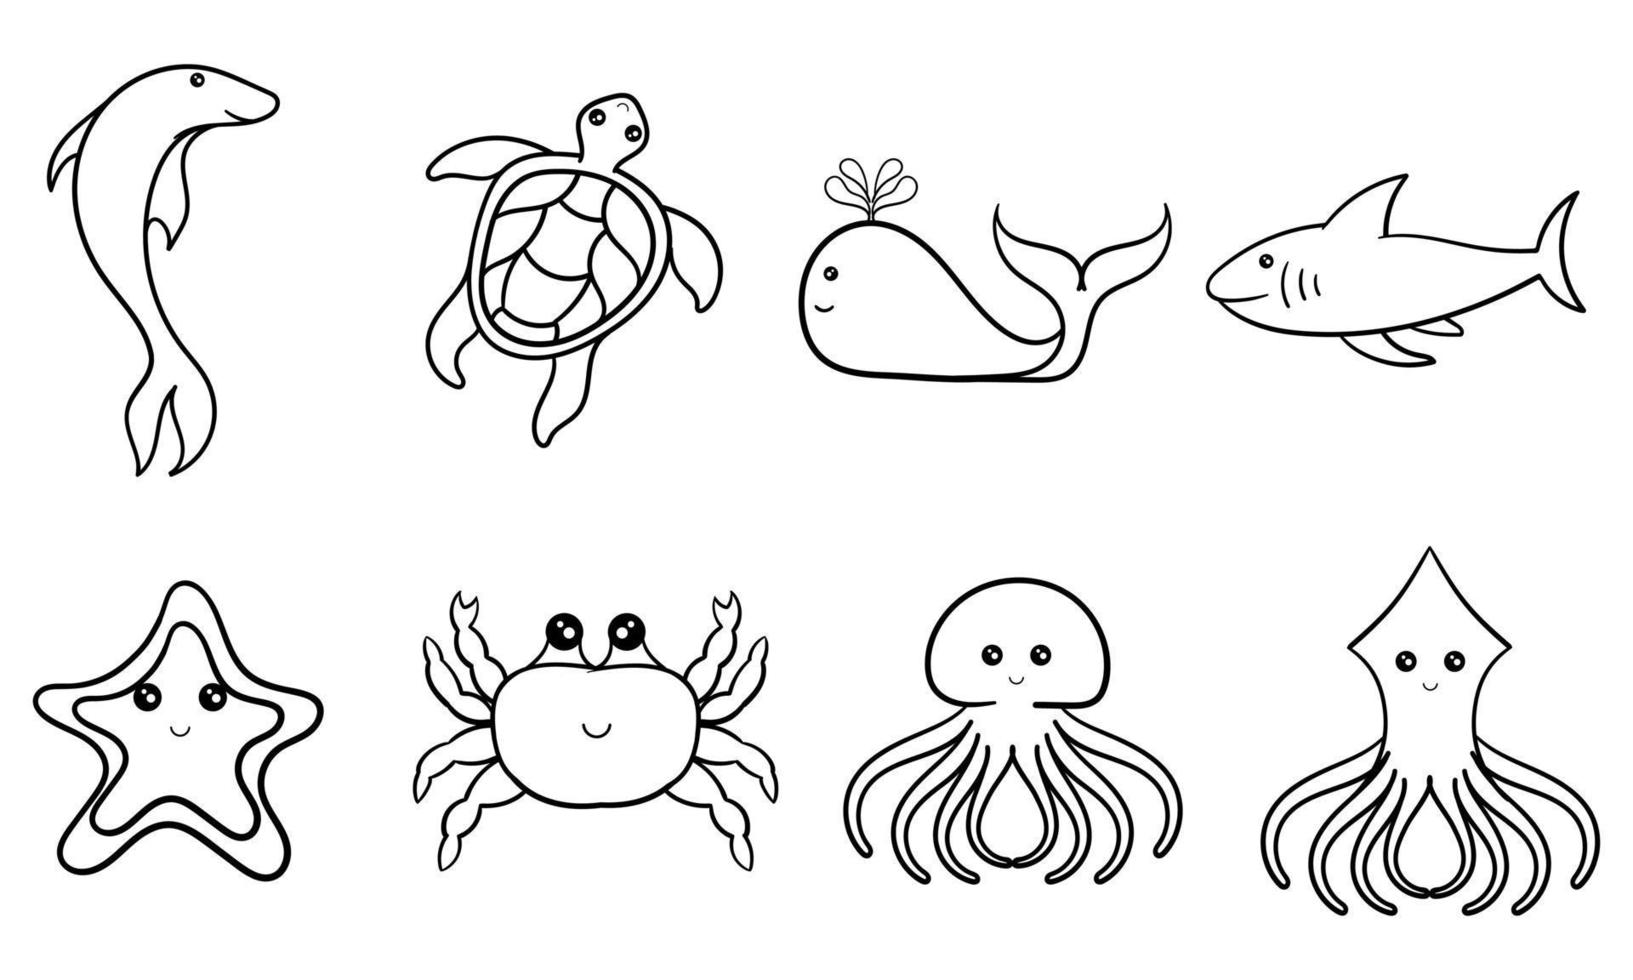 colección dibujada a mano de animales submarinos vector